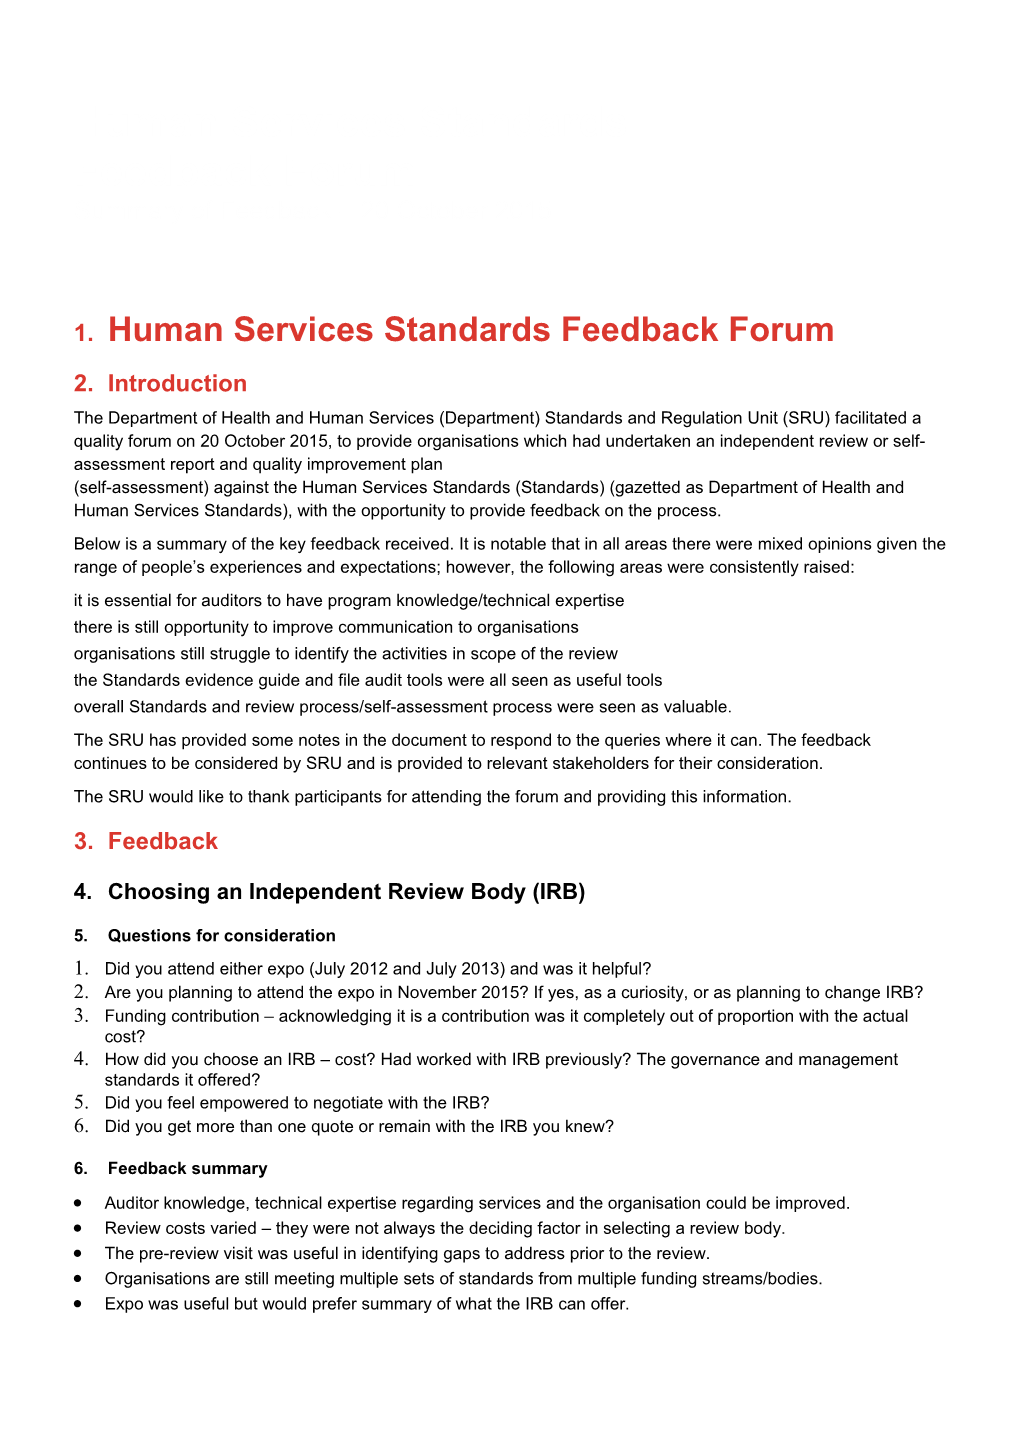 Human Services Standards Feedback Forum